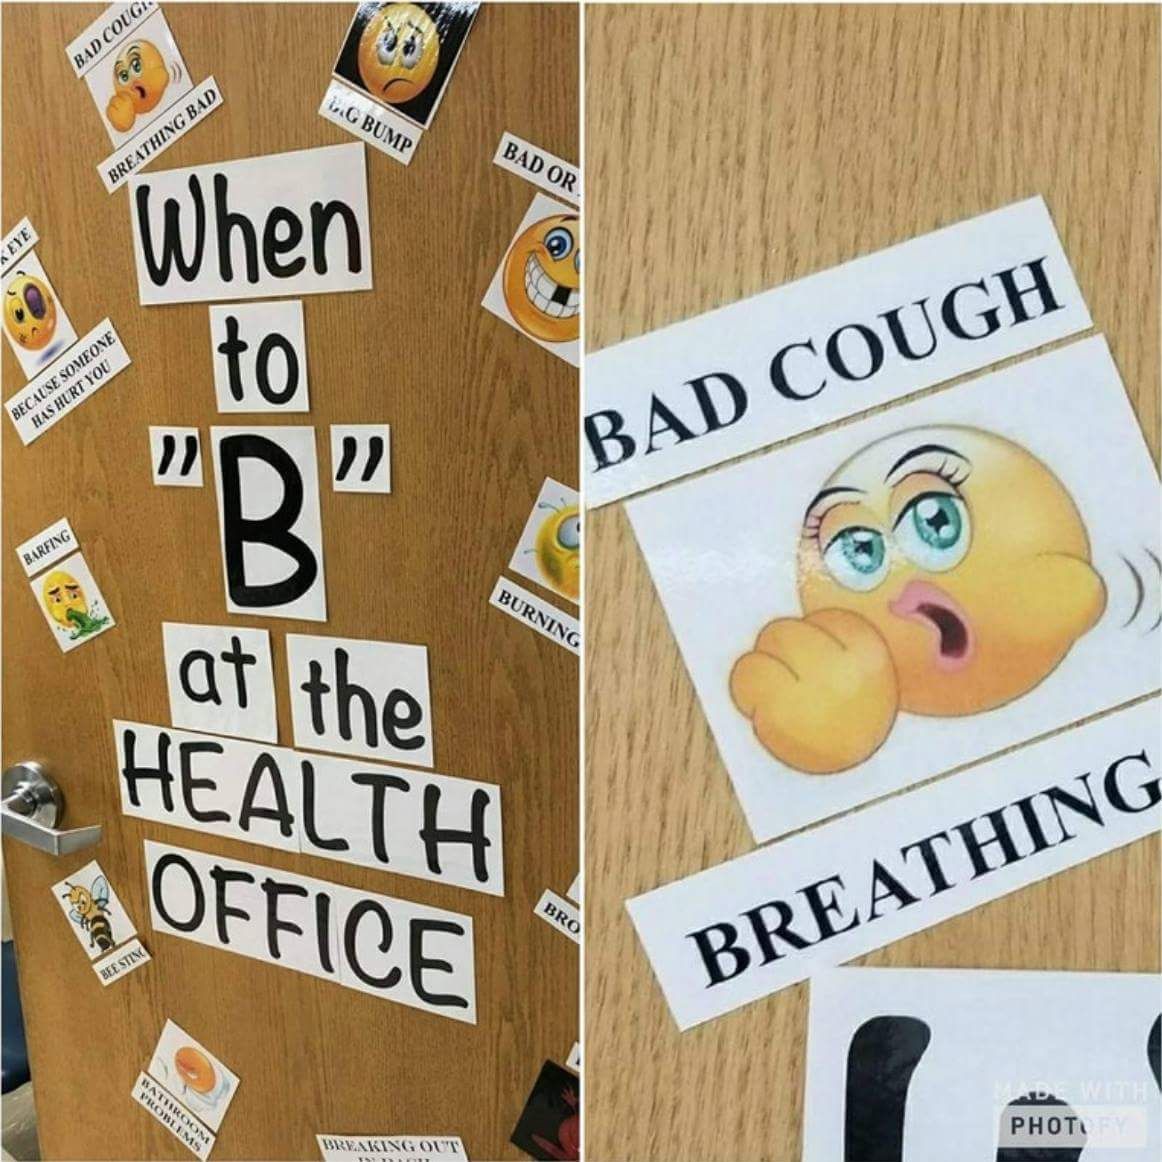 I think the nurse wants go give me a "bad cough" - meme